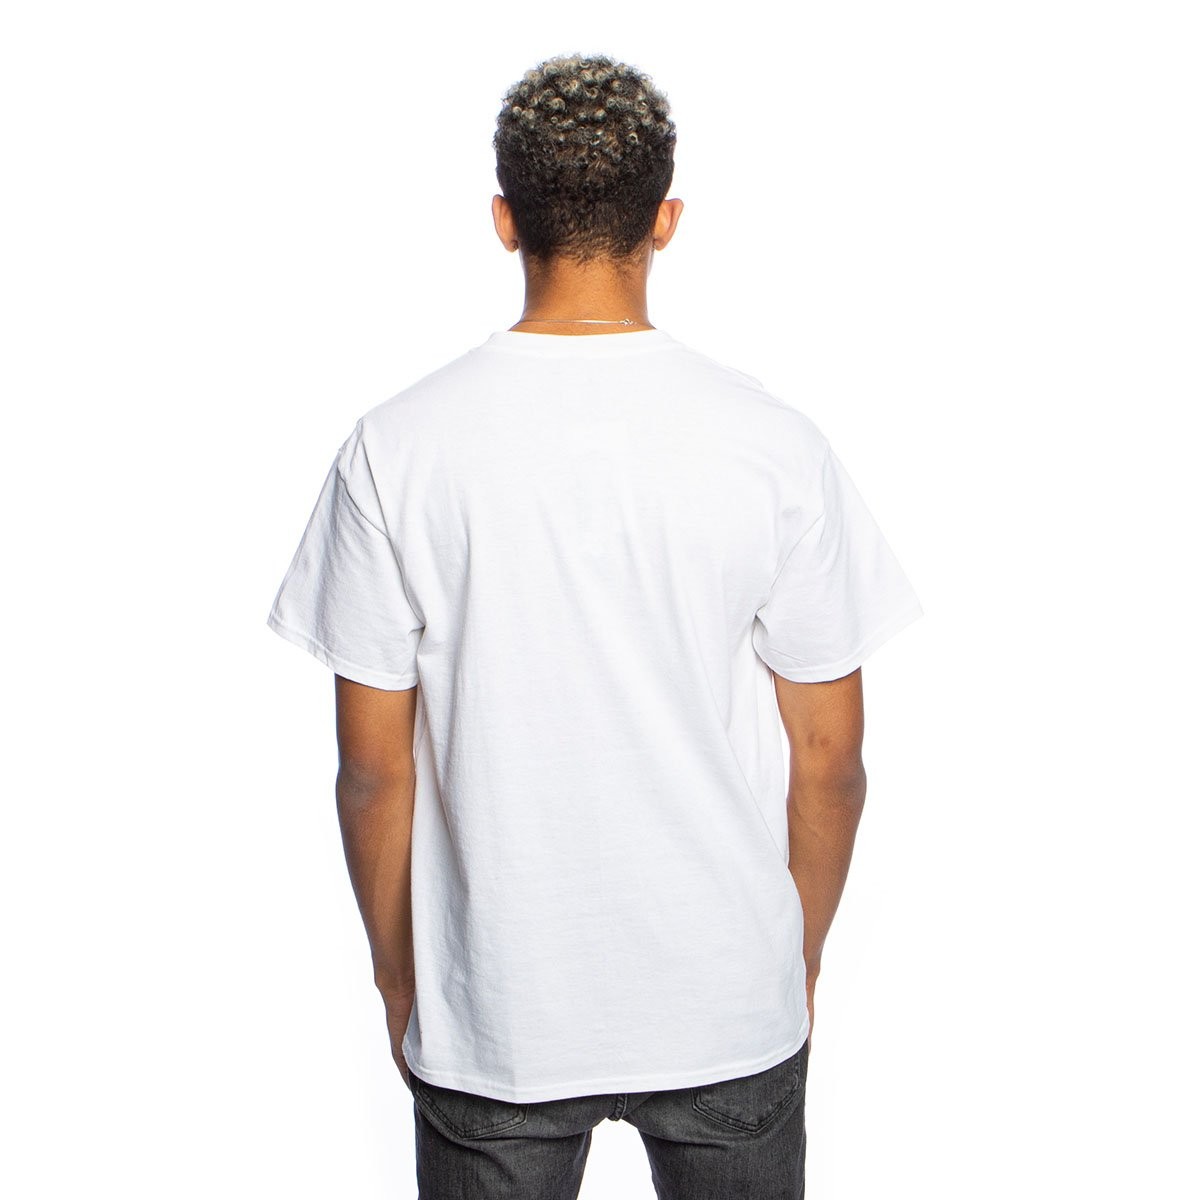 Thrasher Rainbow Mag White T-Shirt 144856